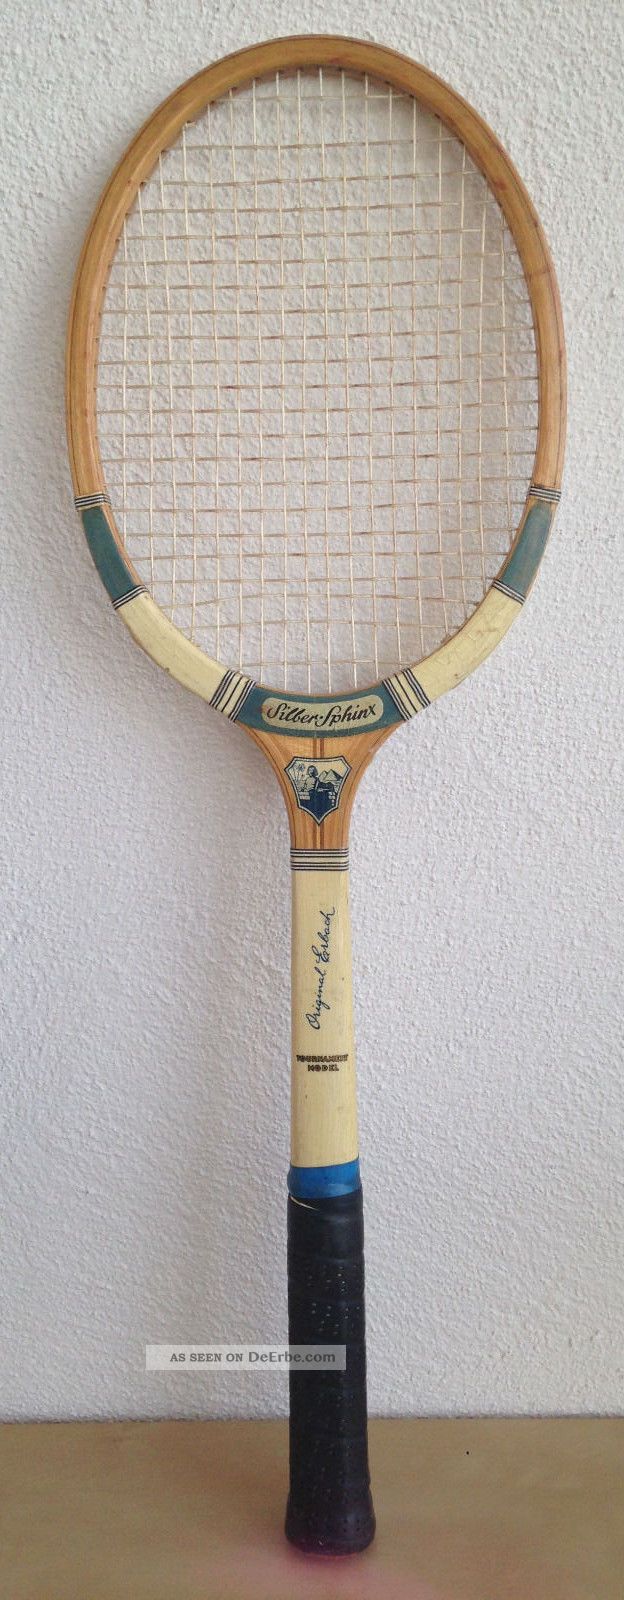 Tennisschläger Erbacher Silber Sphinx Tournament Modell Sammler Holz 50er Jahre 1950-1959 Bild